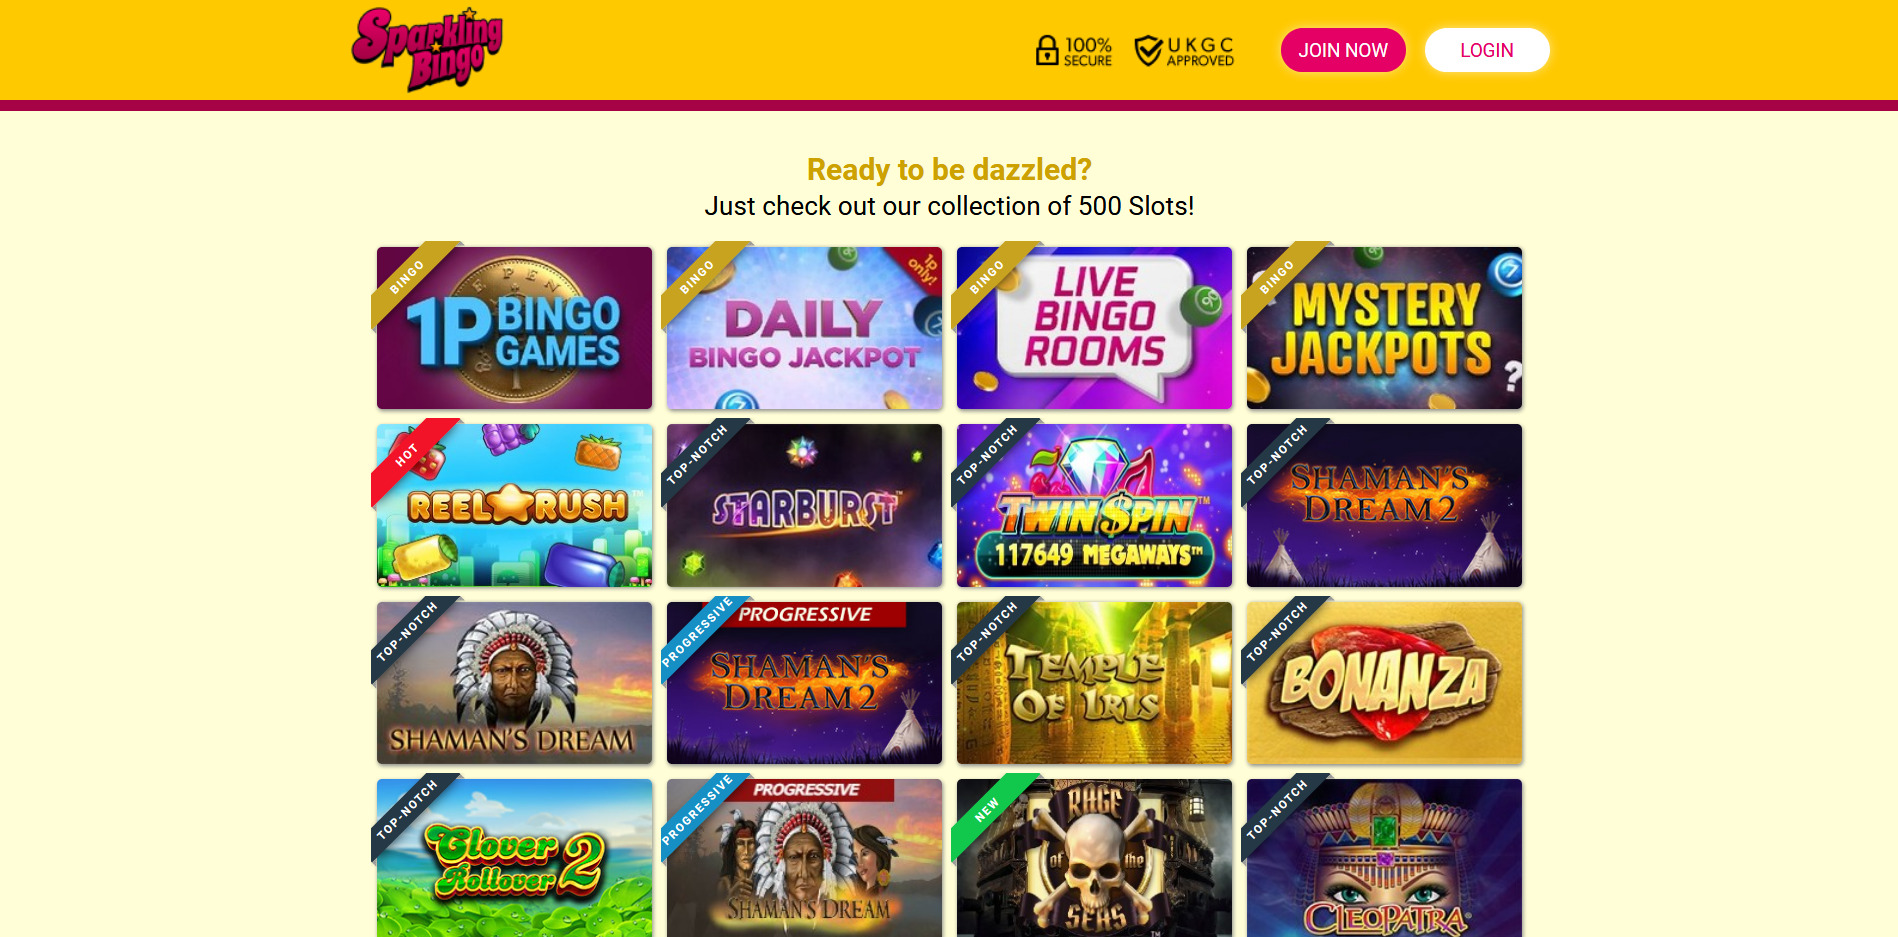 Sparkling Bingo Casino Games